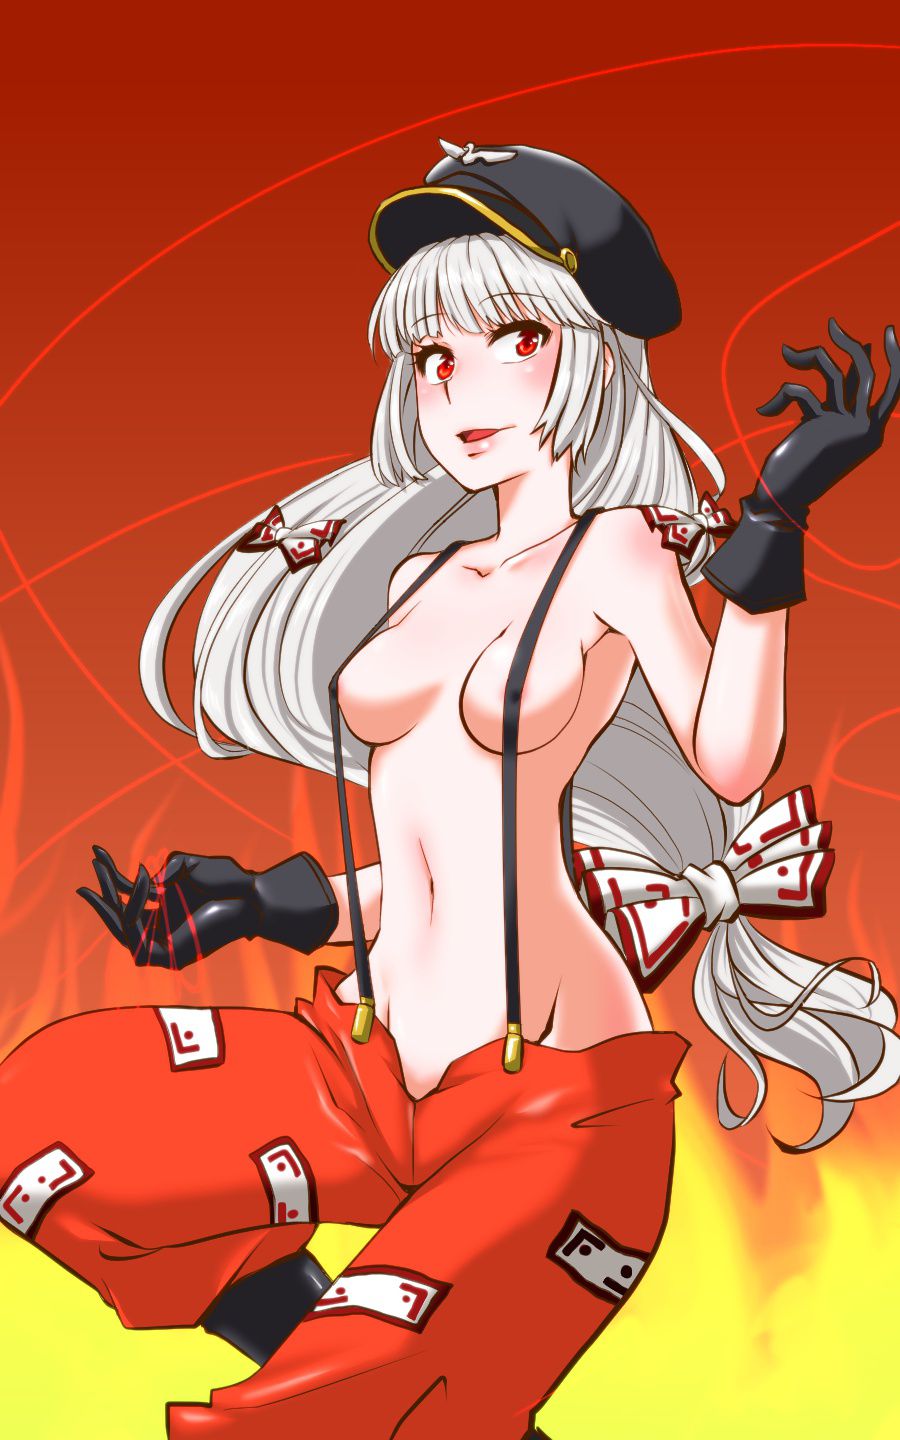 [Touhou Project] Fujiwara Sister Red's Inferno Erotic Image! Part 6 7